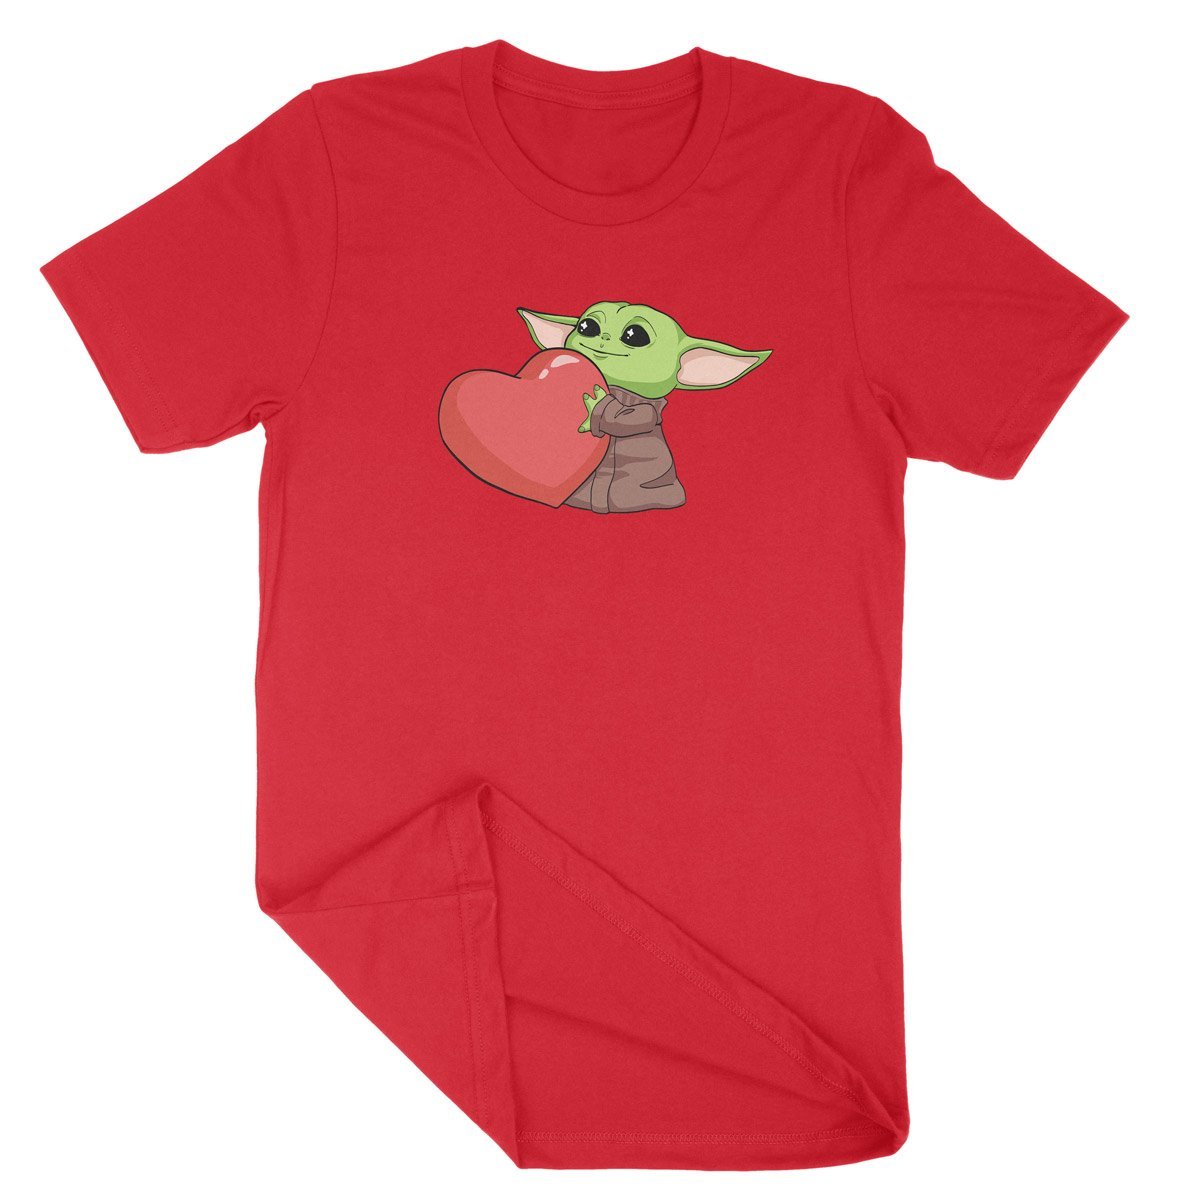 The Child - Valentine's Day T ShirtT-shirt - My E Three